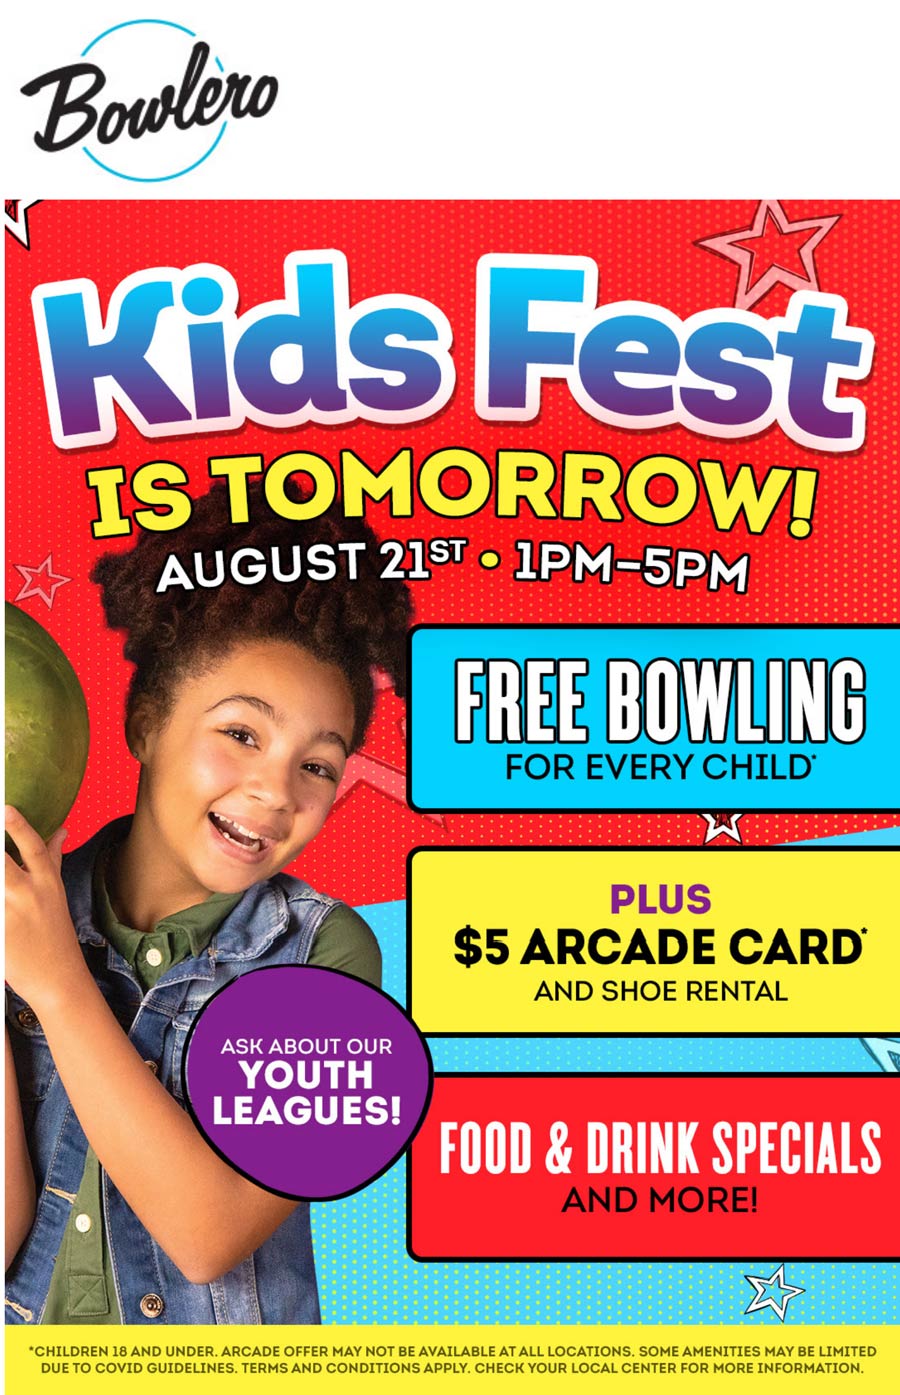 Bowlero stores Coupon  Free kids bowling Saturday 1-5p at Bowlero alleys #bowlero 